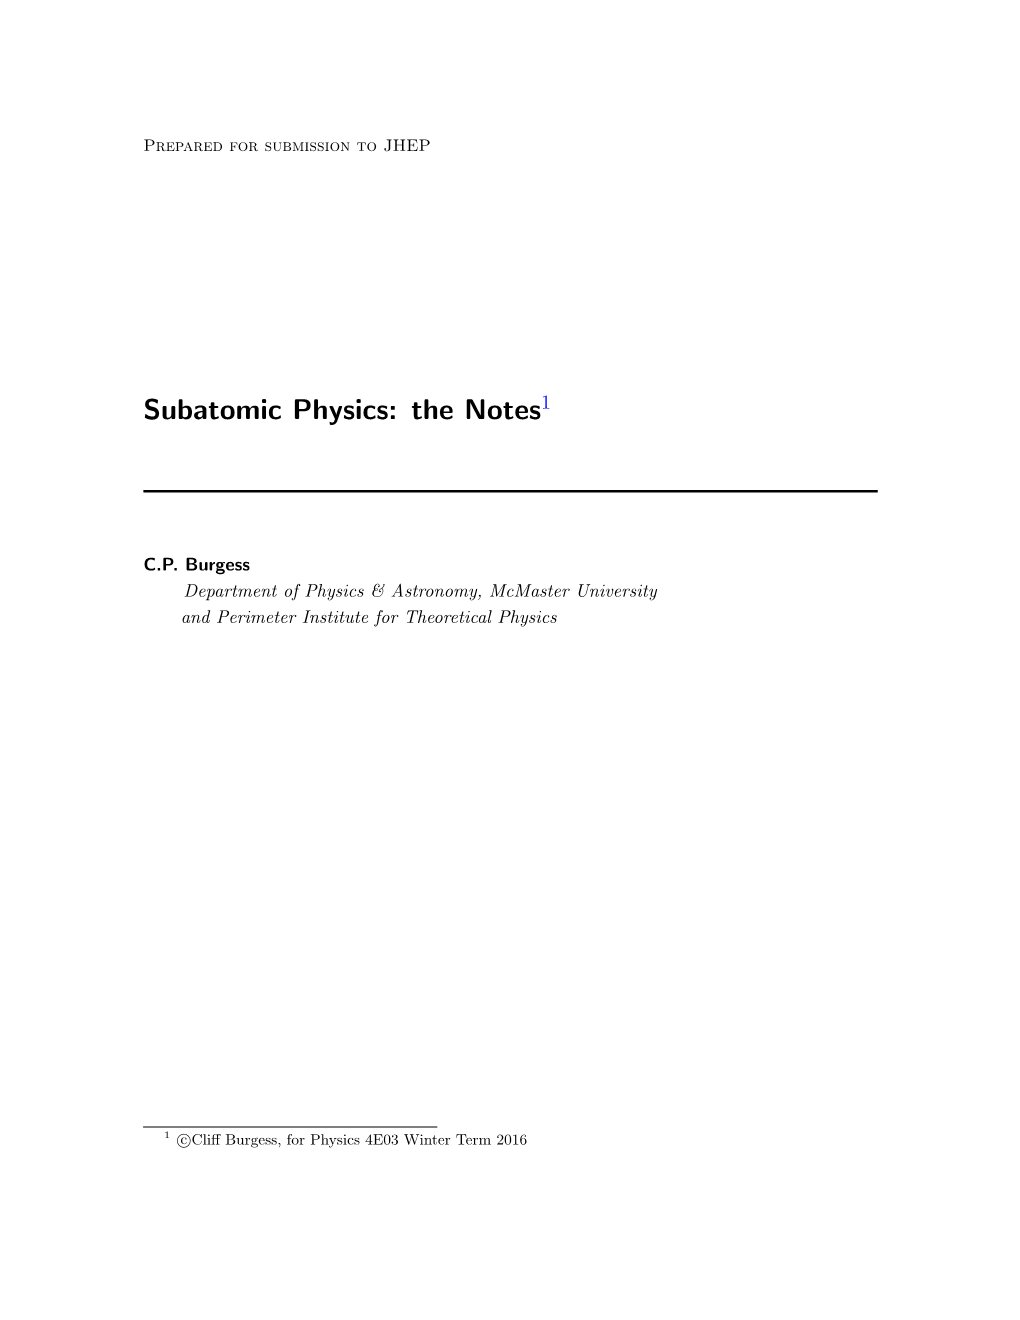 Subatomic Physics: the Notes1